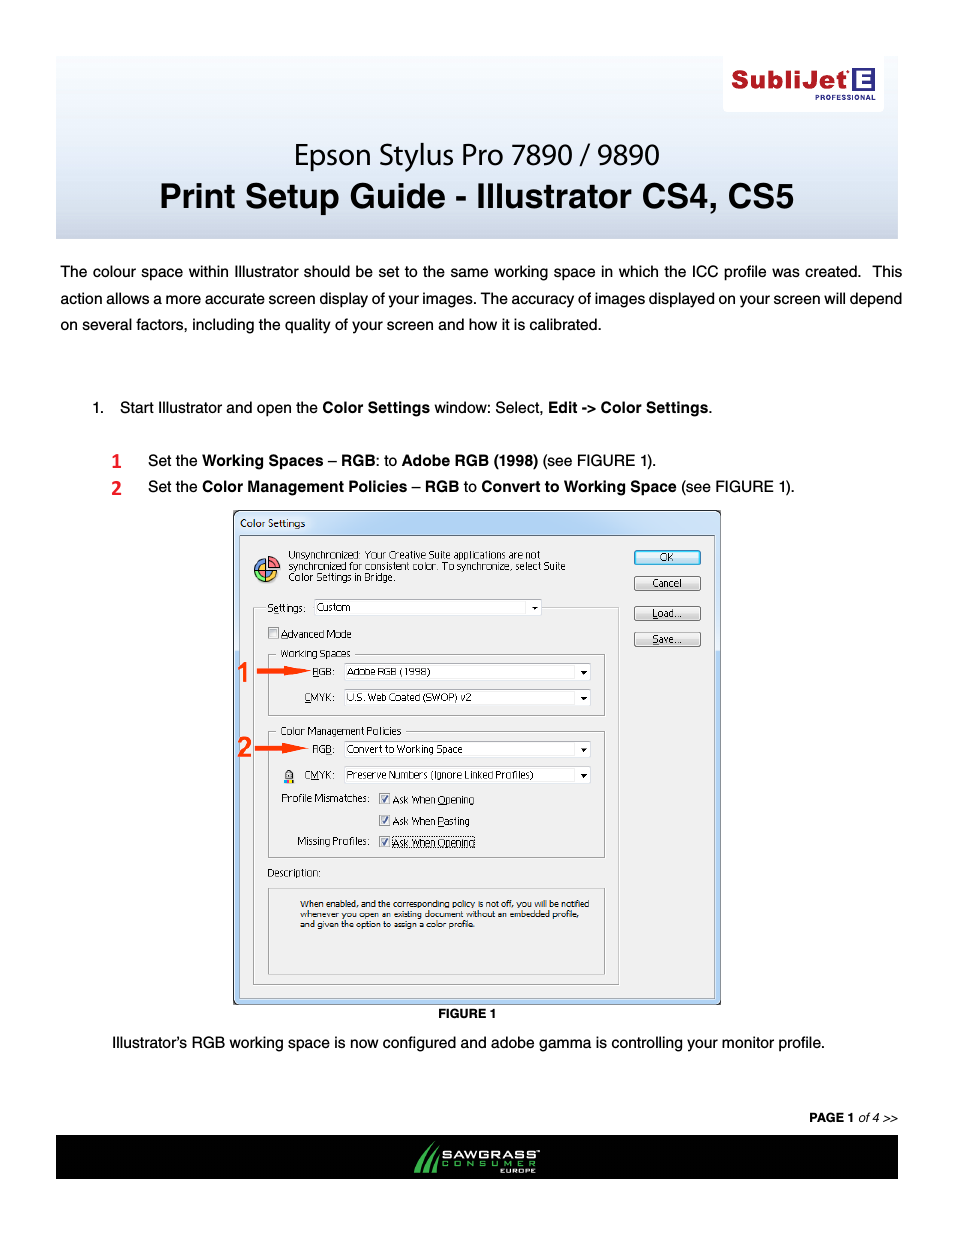 SubliJet E Epson Stylus Pro 9890 (Windows ICC Profile Setup): Print & Setup Guide Illustrator CS4 - CS5